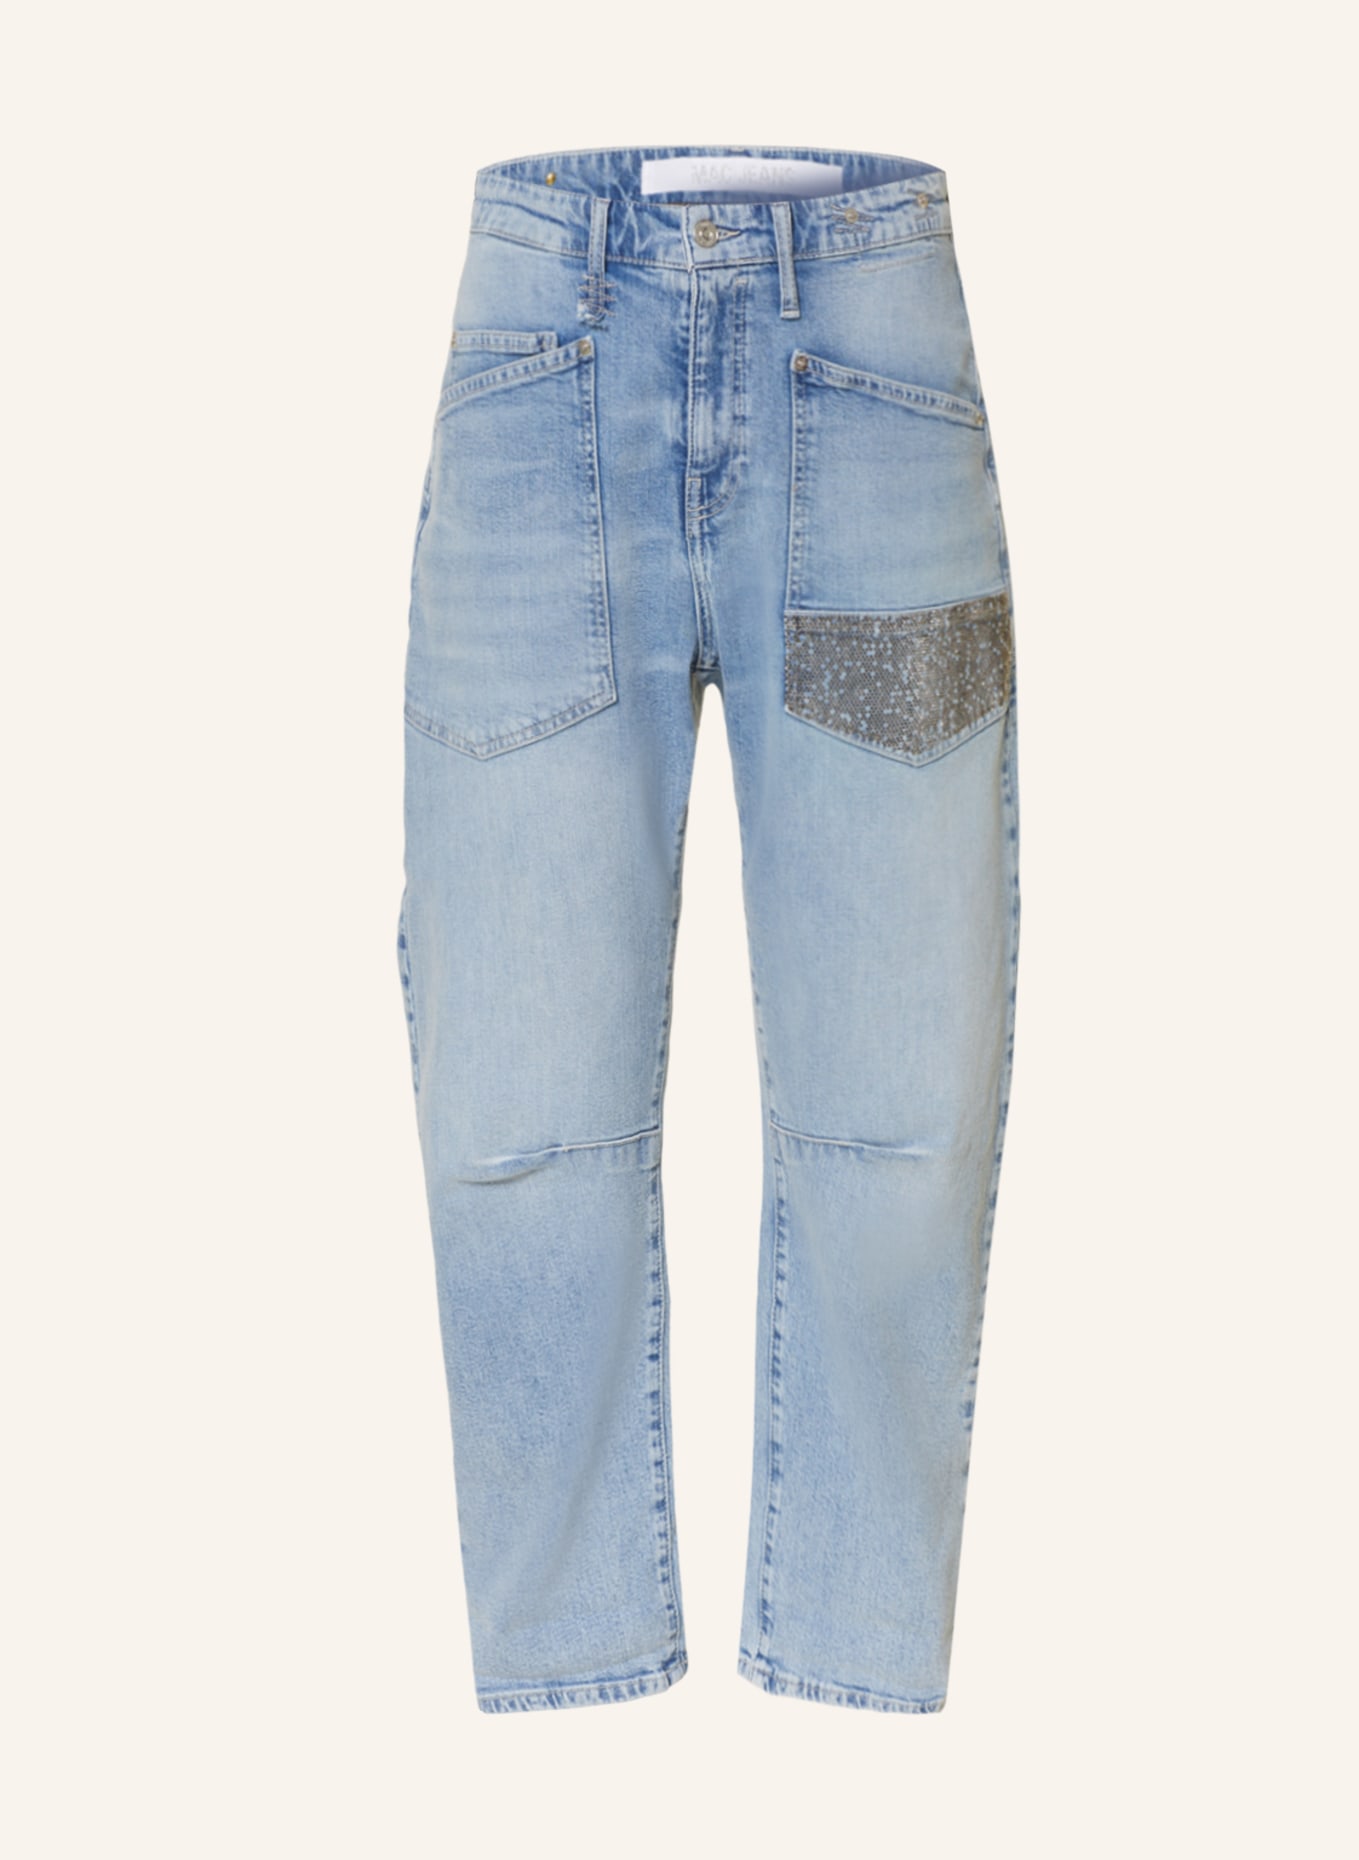 Womens vintage polo jeans - Gem